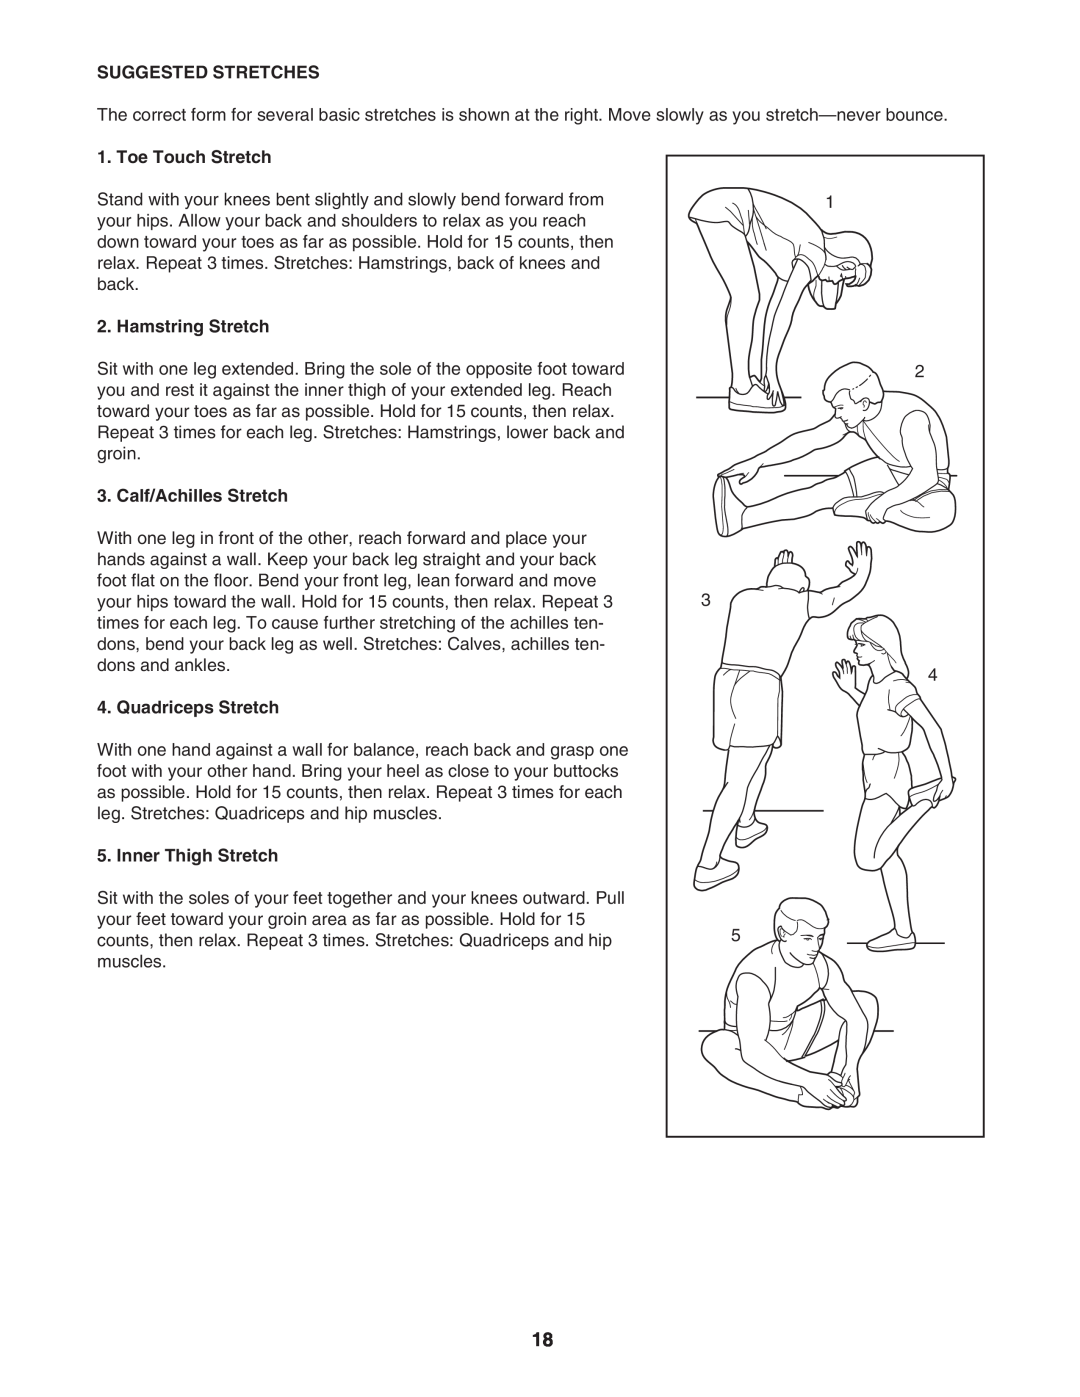 ProForm PFTL31105.1 Suggested Stretches, Toe Touch Stretch, Hamstring Stretch, Calf/Achilles Stretch, Quadriceps Stretch 